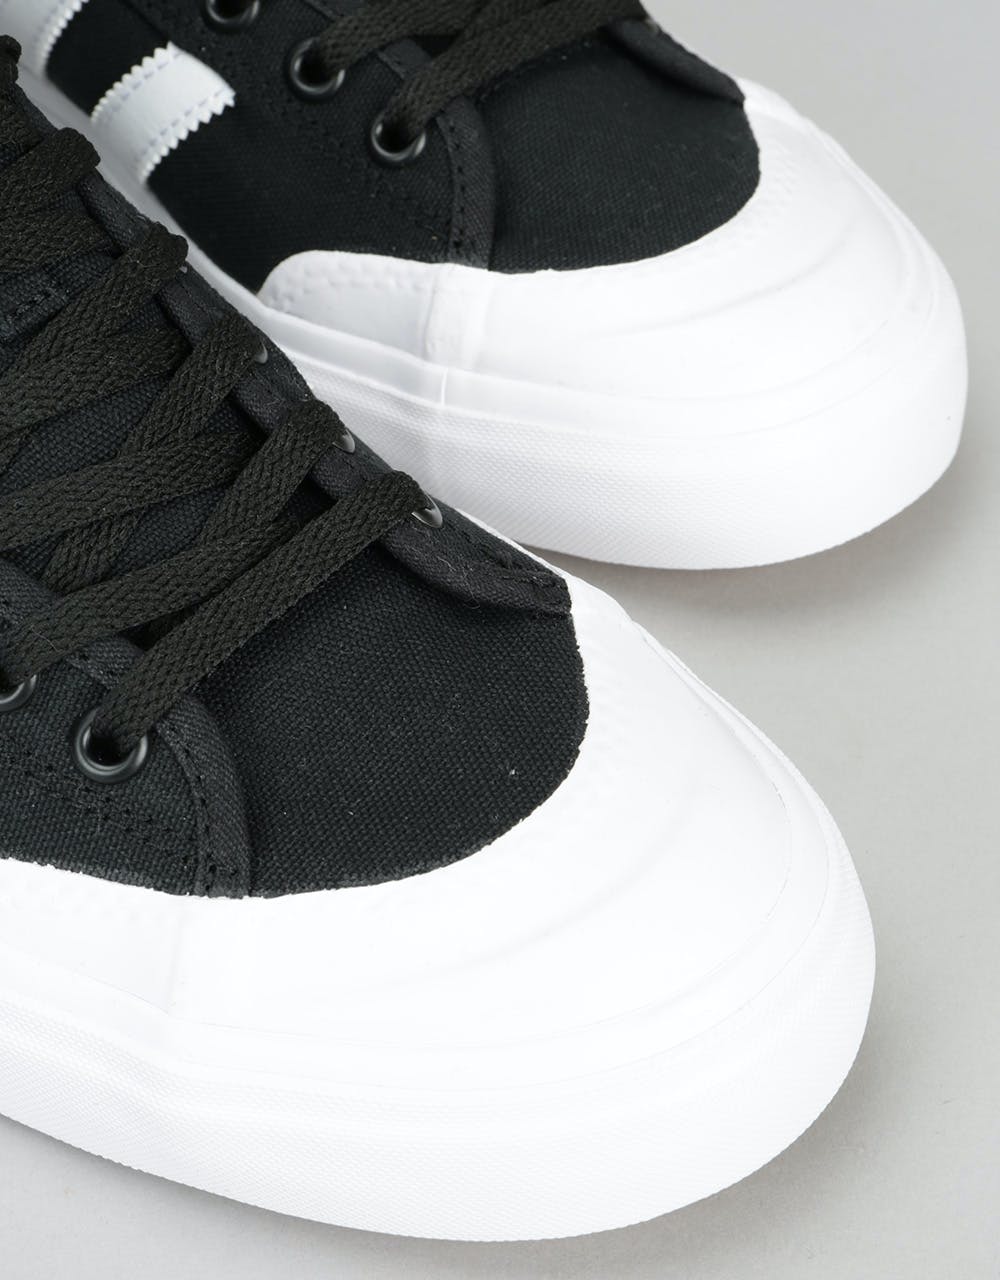 Adidas Matchcourt Skate Shoe - Core Black/Ftwr White/Core Black